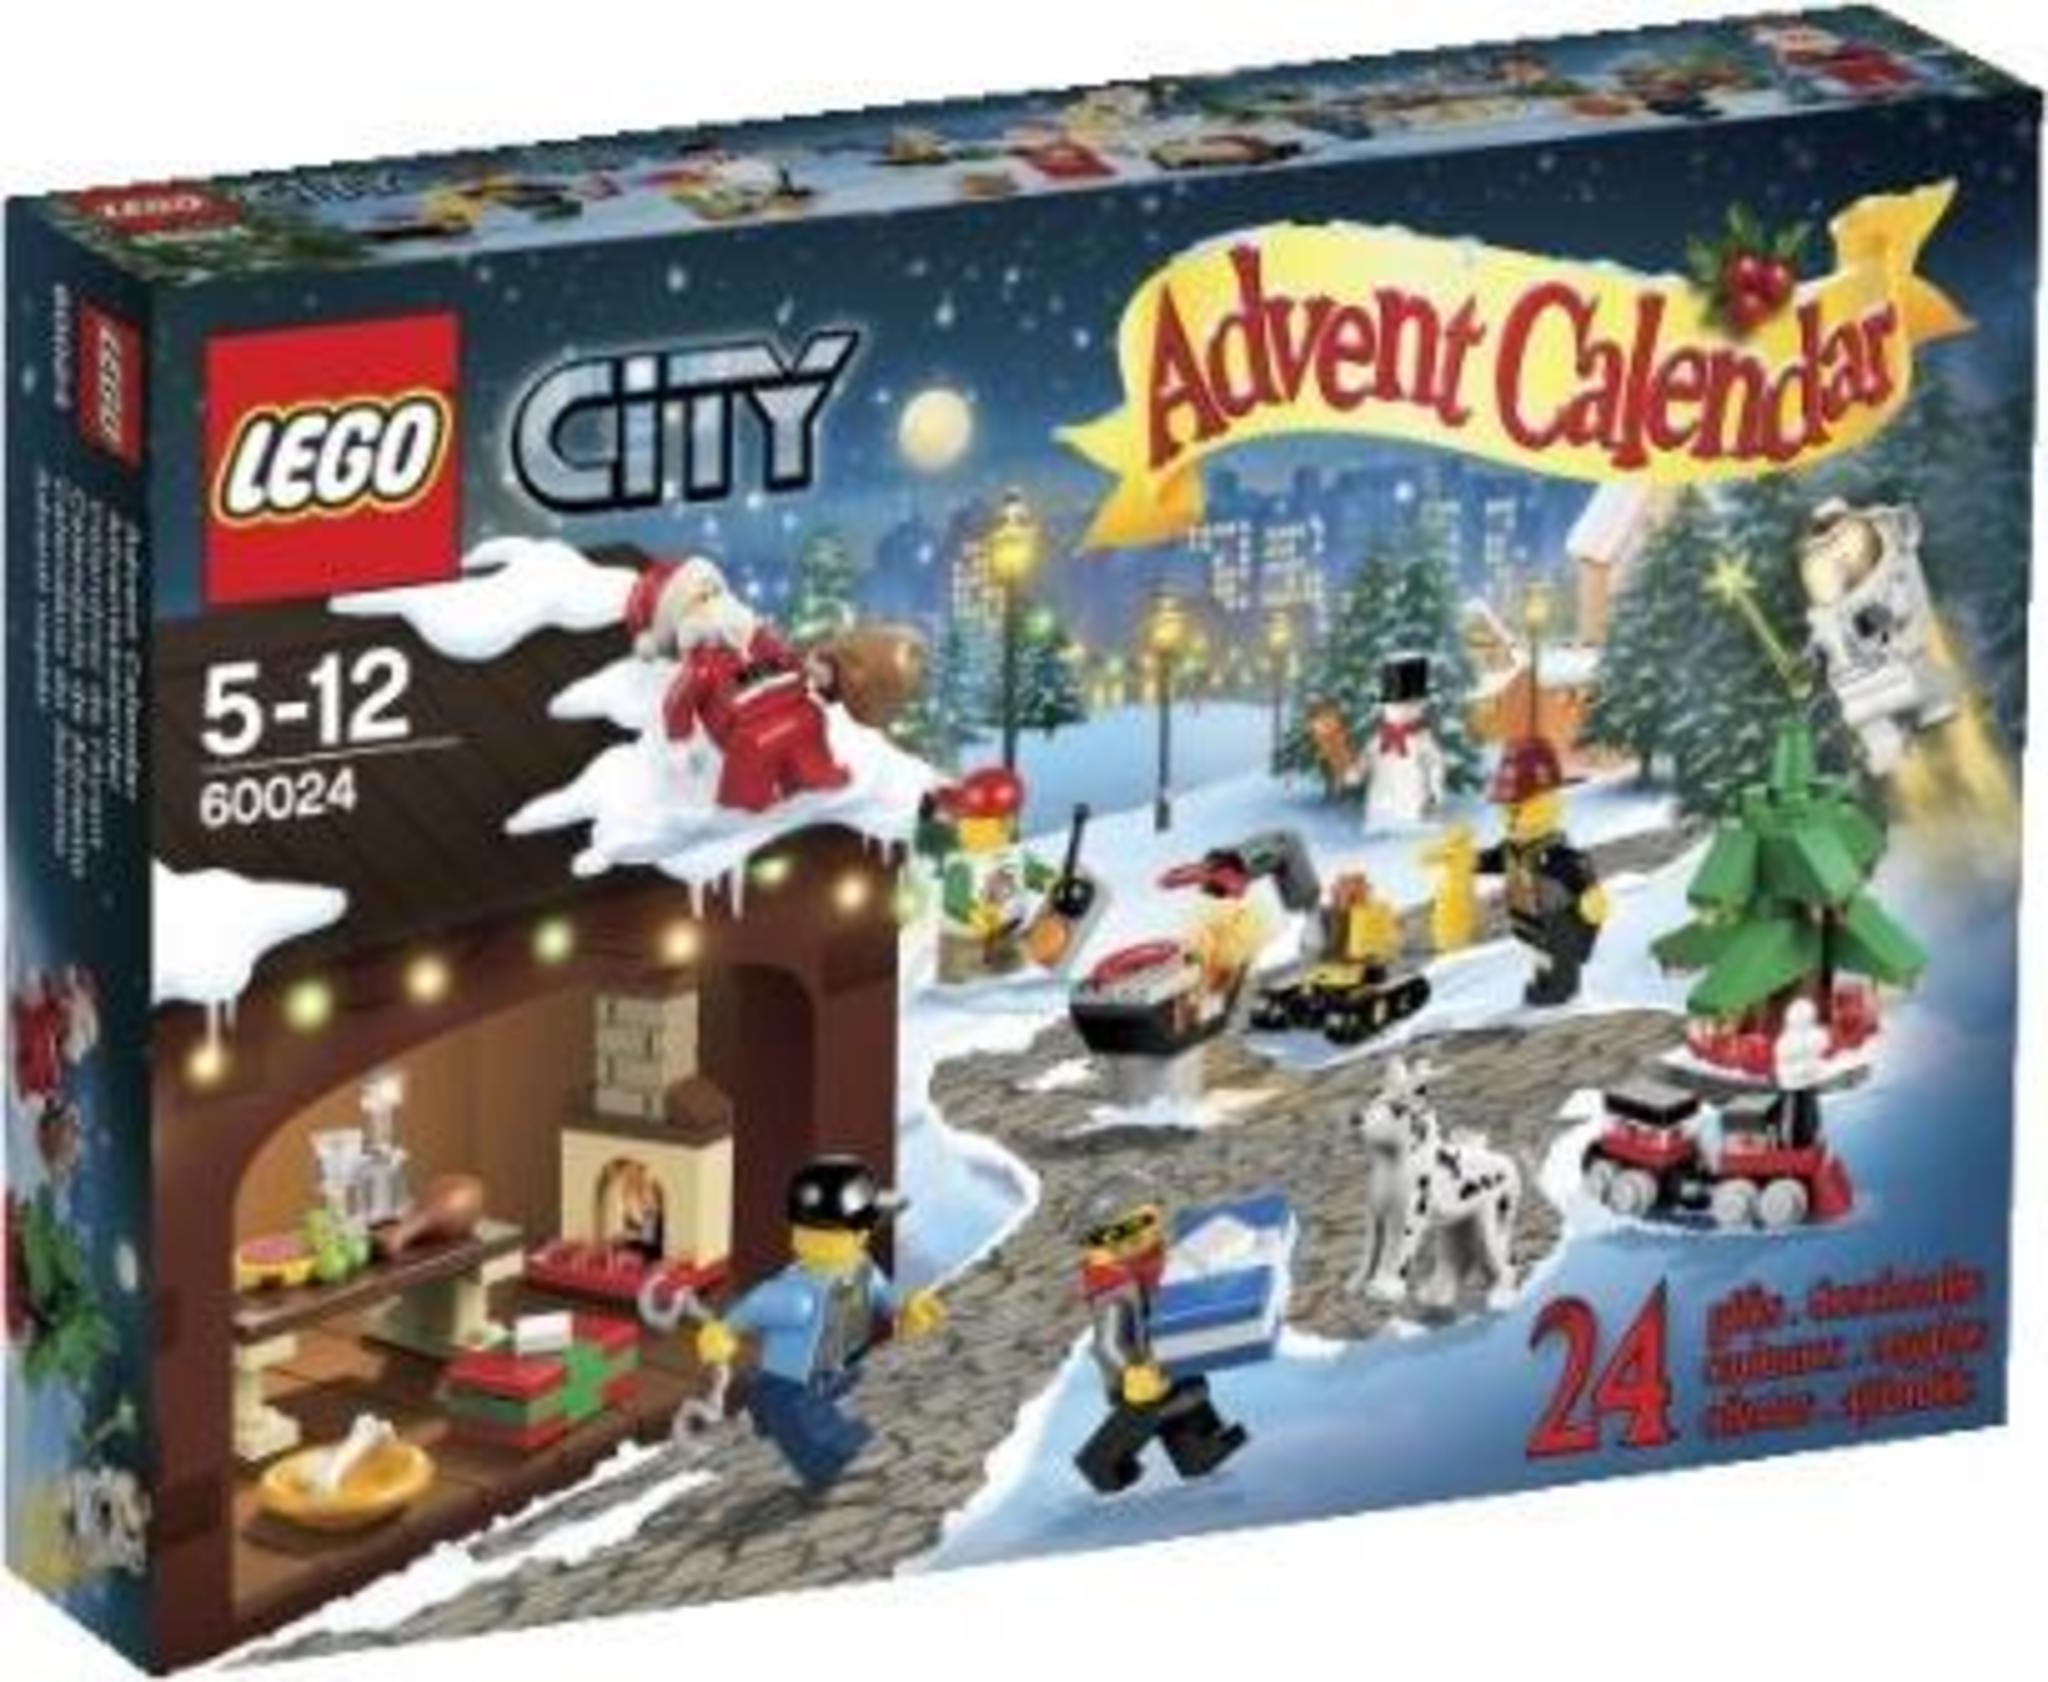 LEGO City 60024 - City Advent Calendar | Mattonito